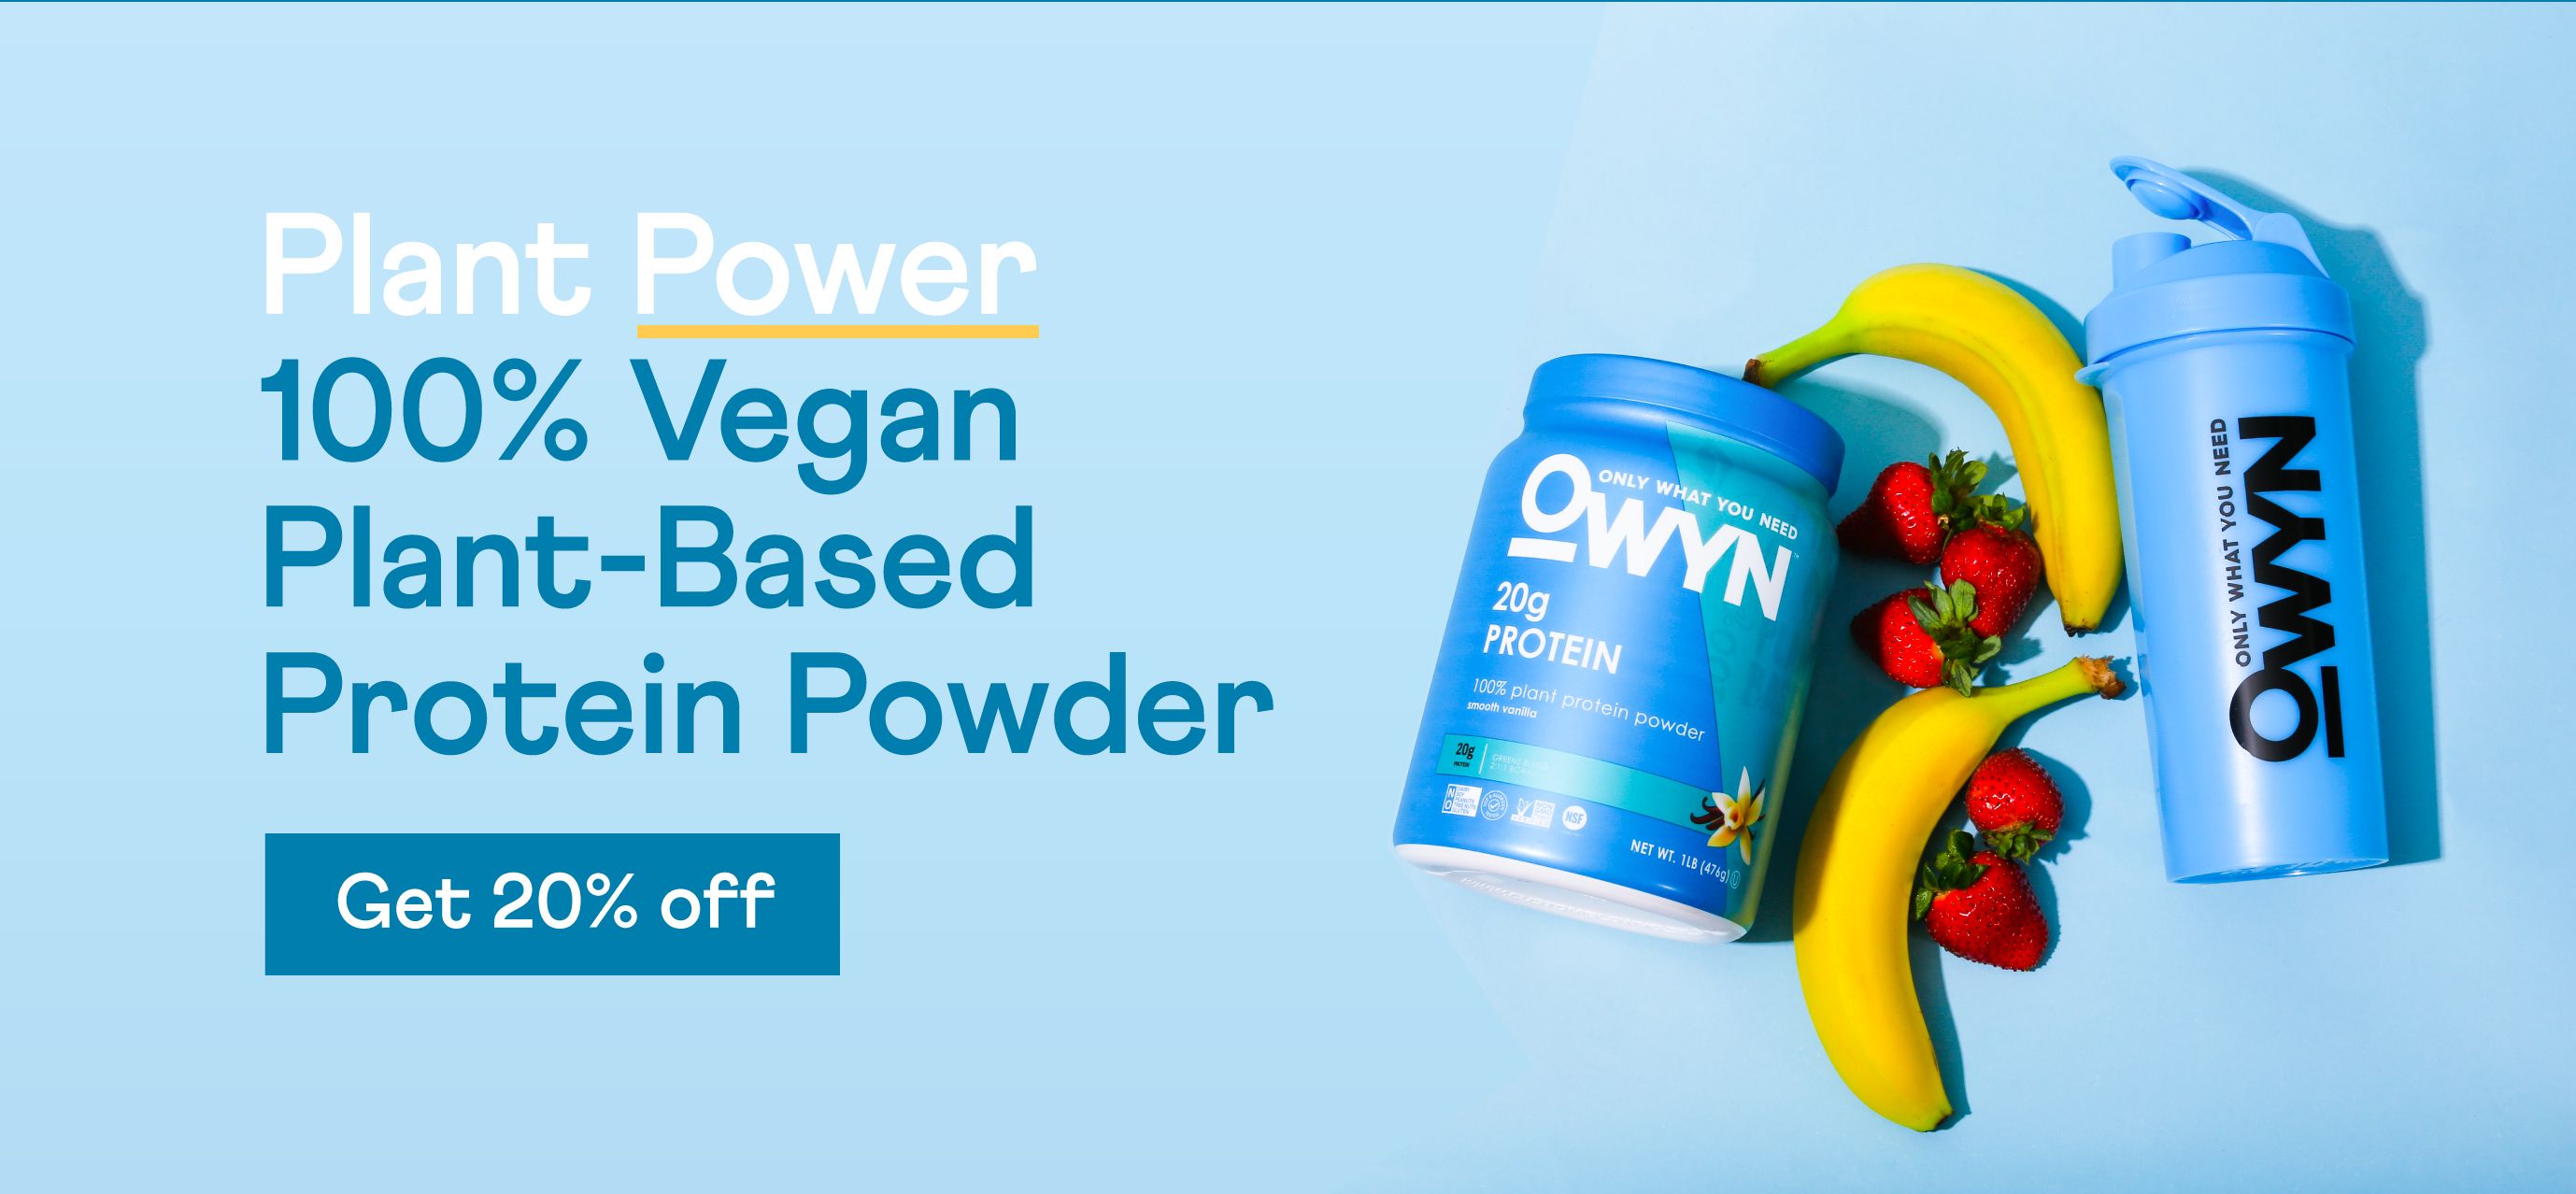 Plant Power - 100% Vegan Plant-Based Protein Powder